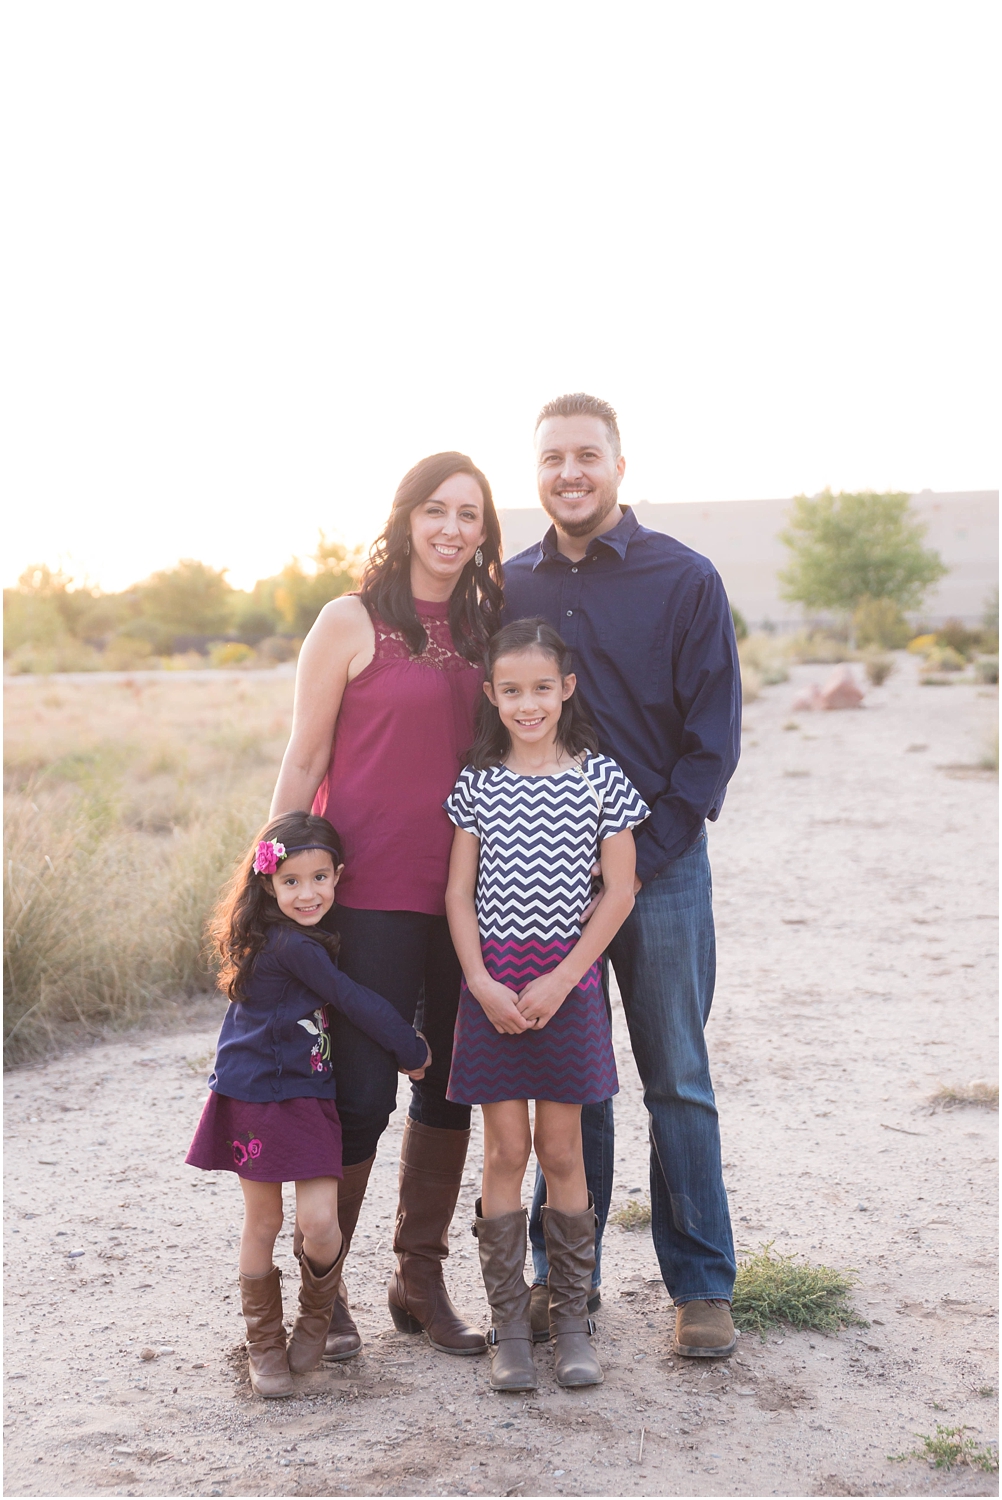 Bachechi Open Space Large Family Photography | Albuquerque New Mexico | Family Photography